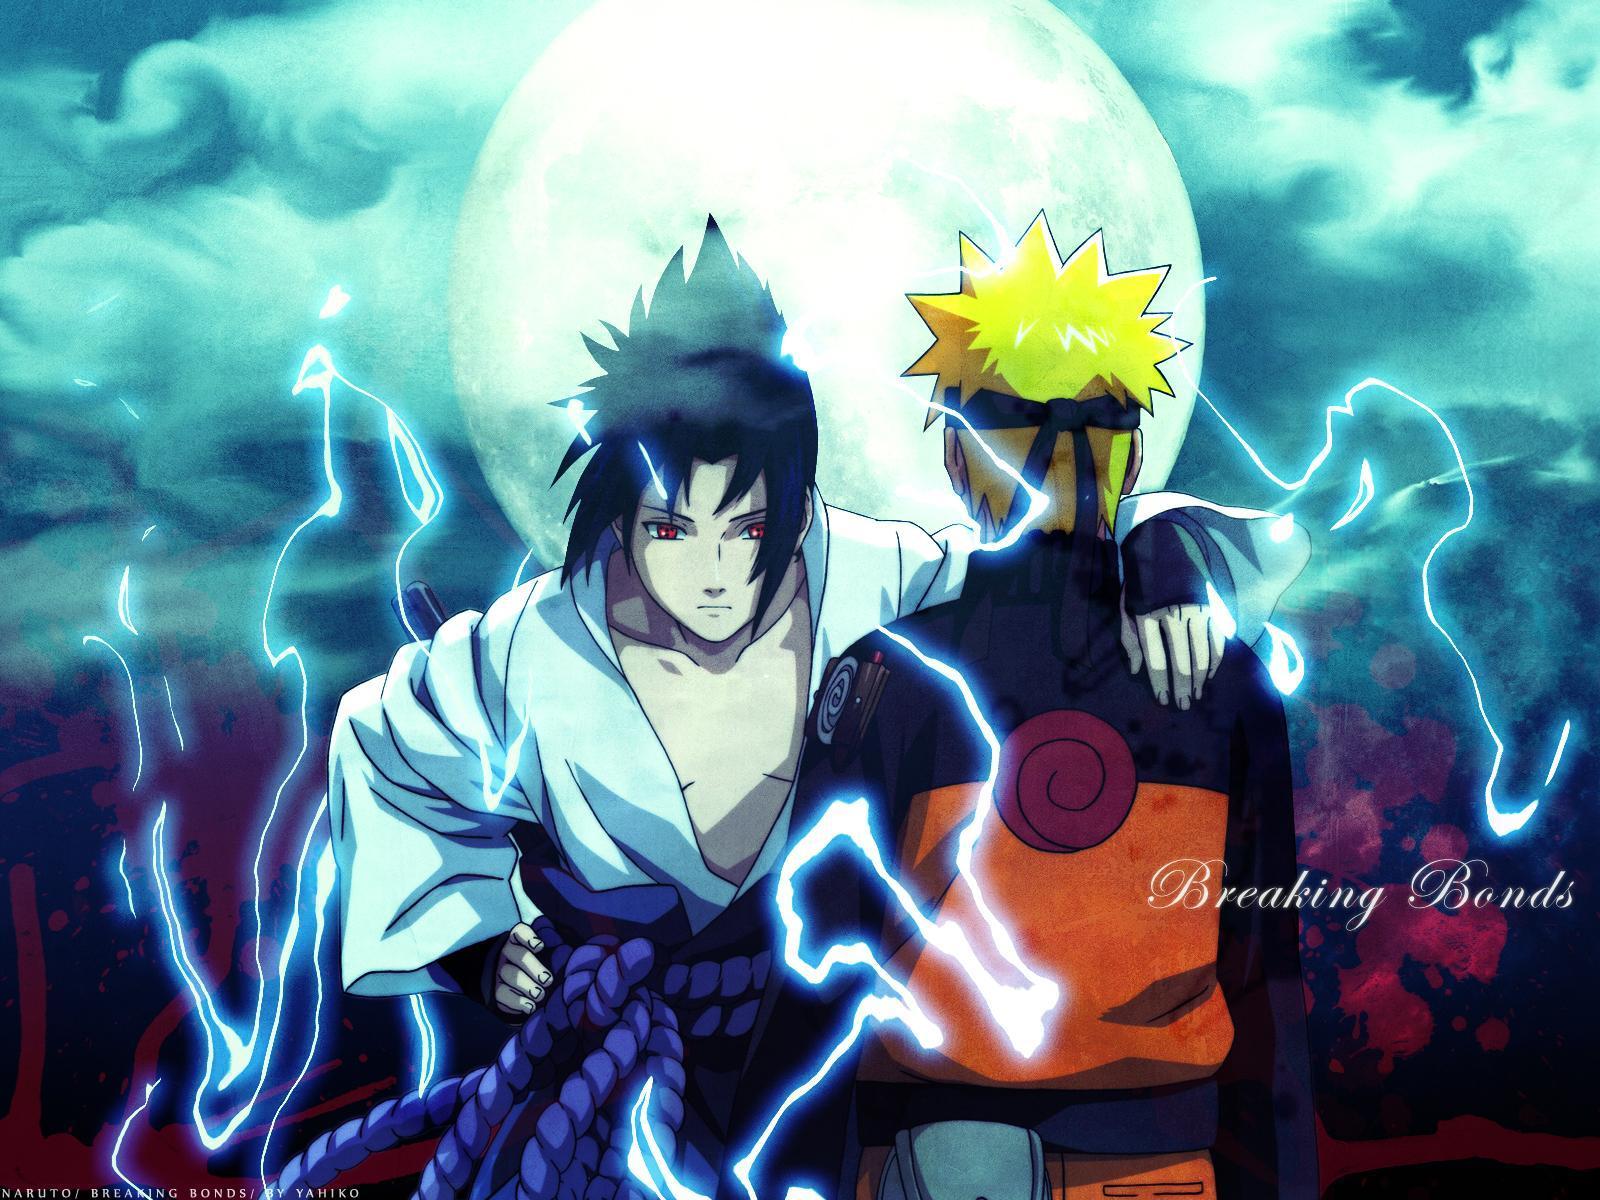 Shippuuden Image Naruto Vs Sasuke HD Wallpaper And Background Photos